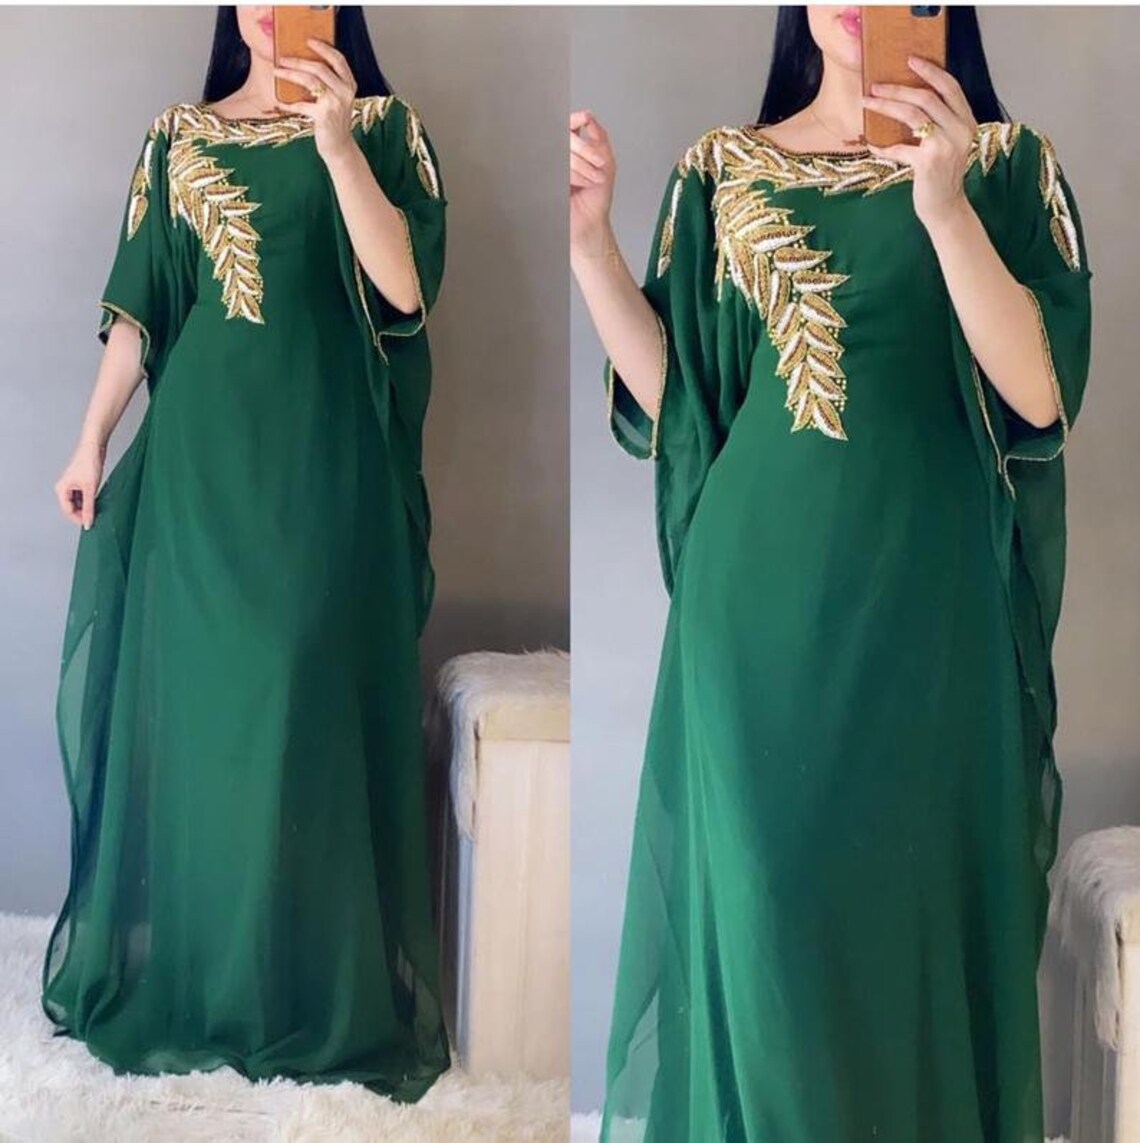 SALE New Royal Islamic Modern Elegant Dubai Moroccan Caftan - Etsy